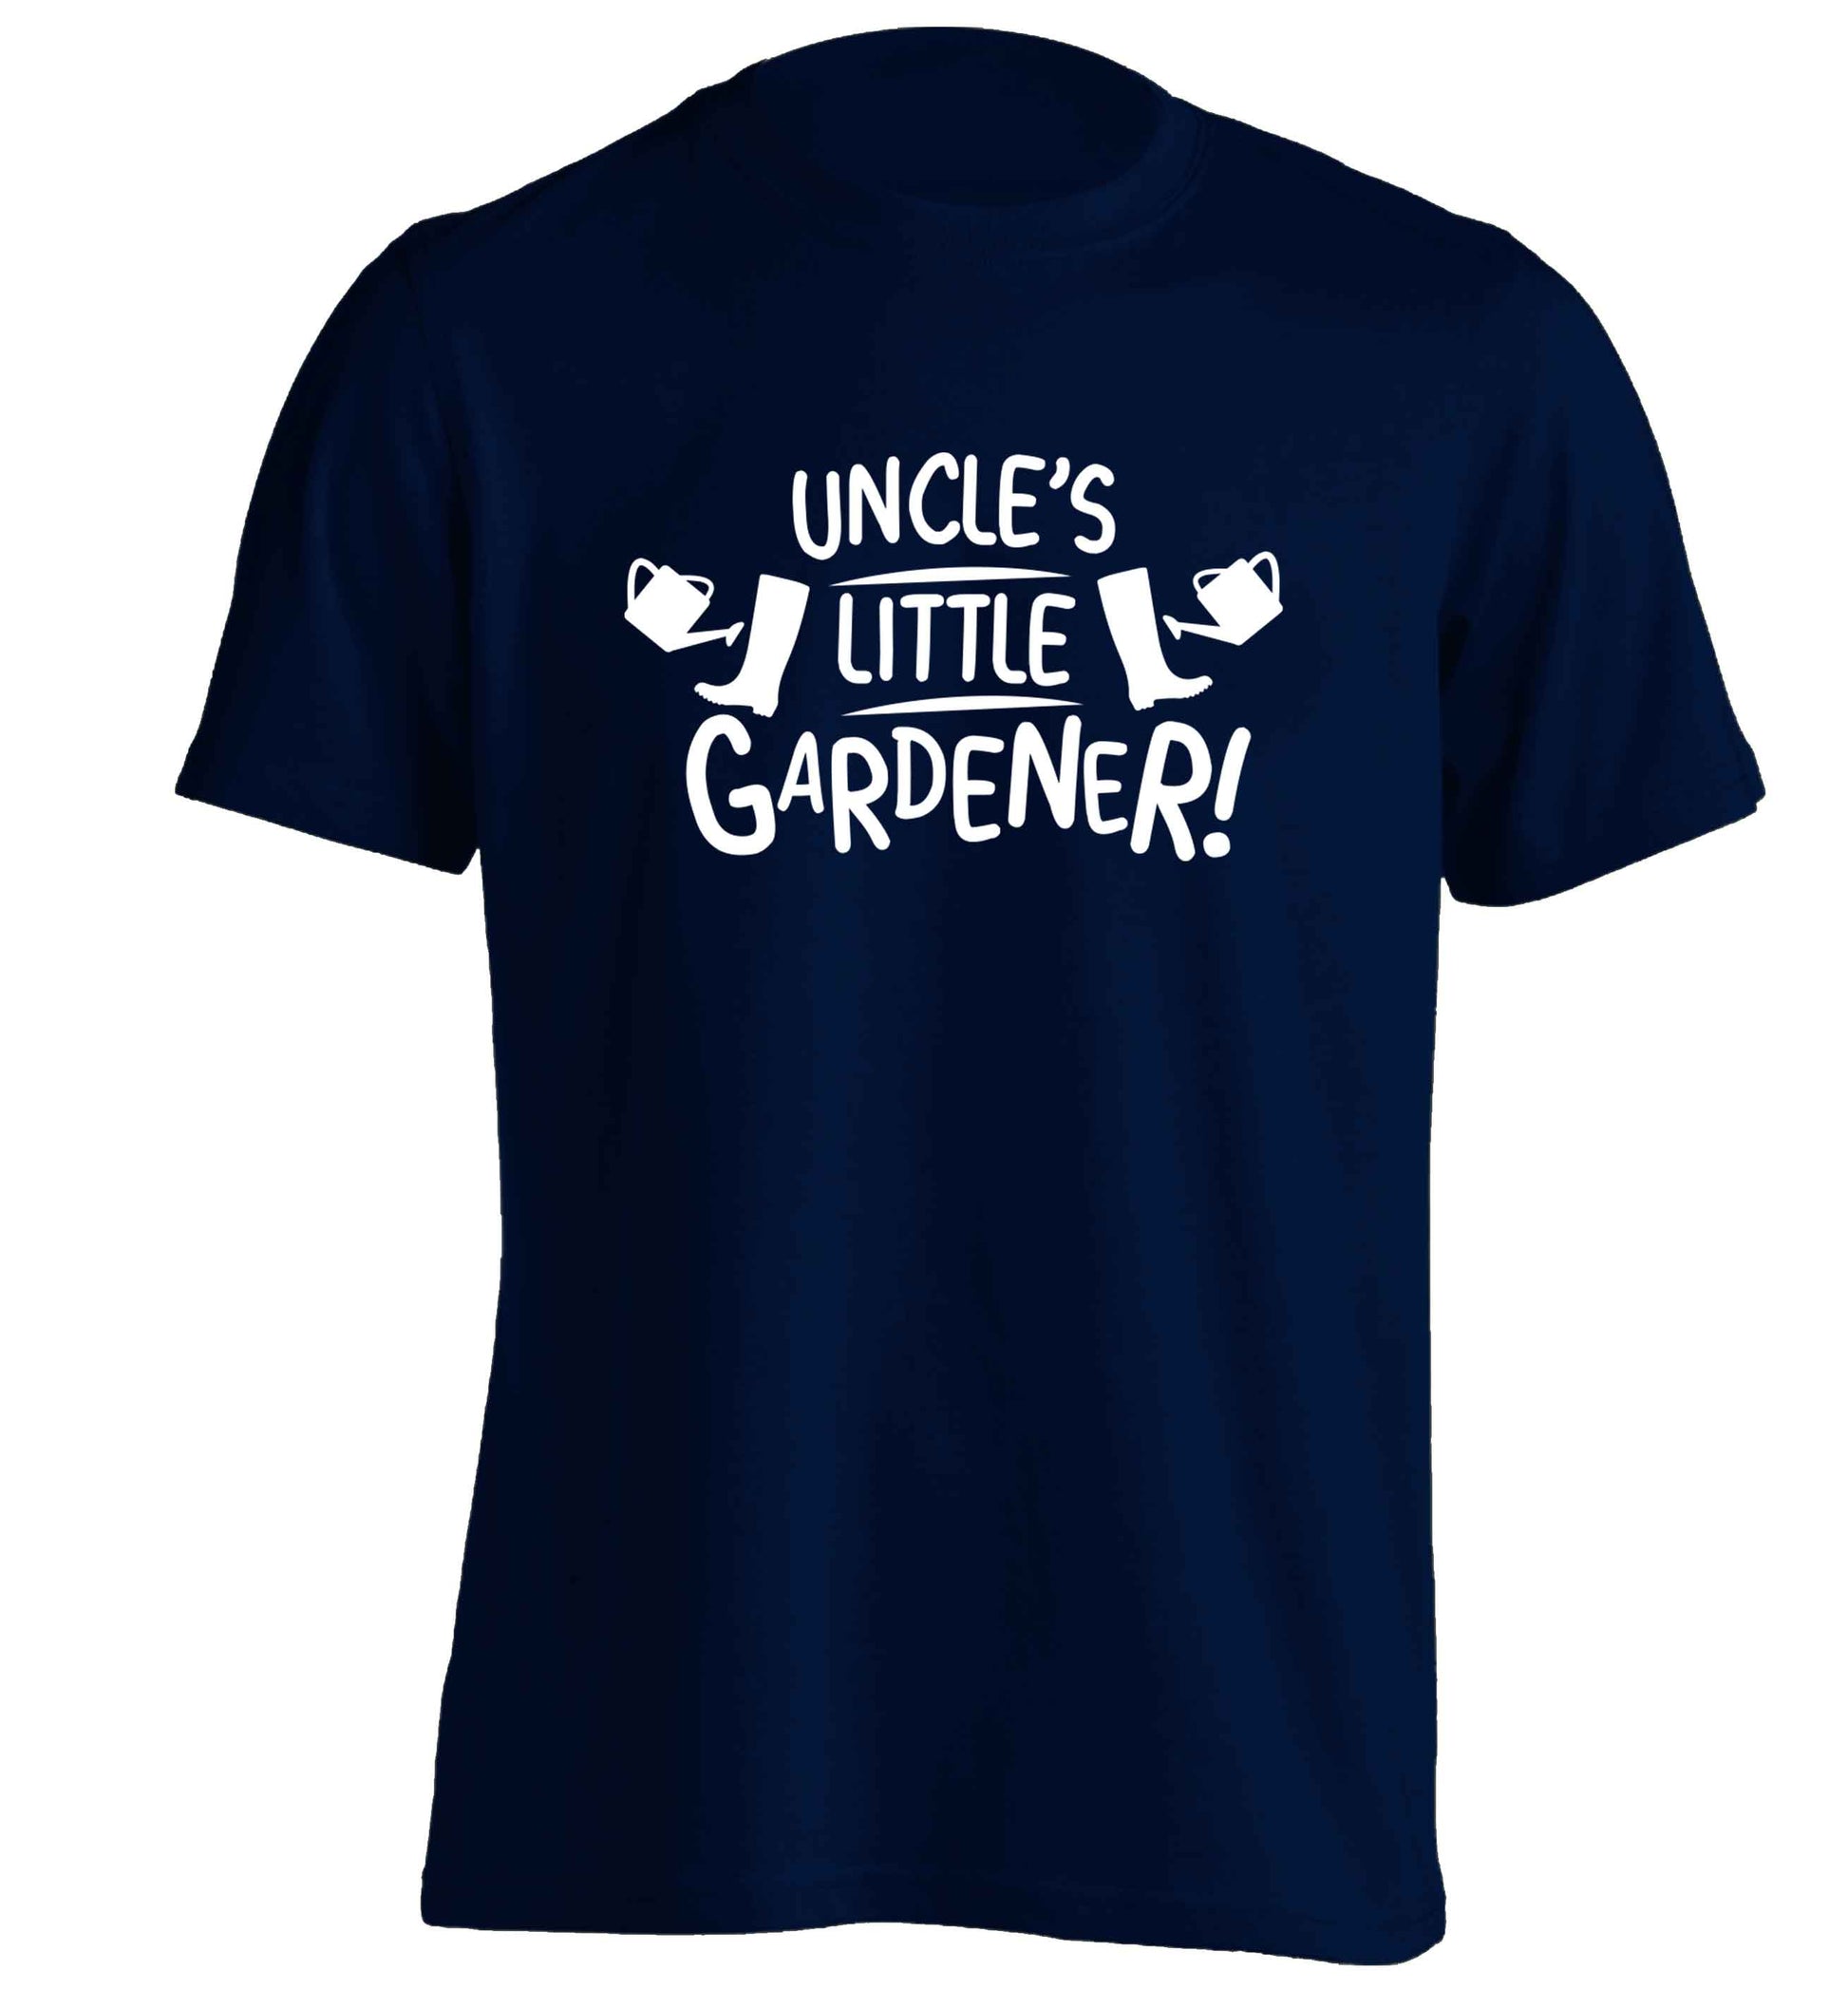 Uncle's little gardener adults unisex navy Tshirt 2XL